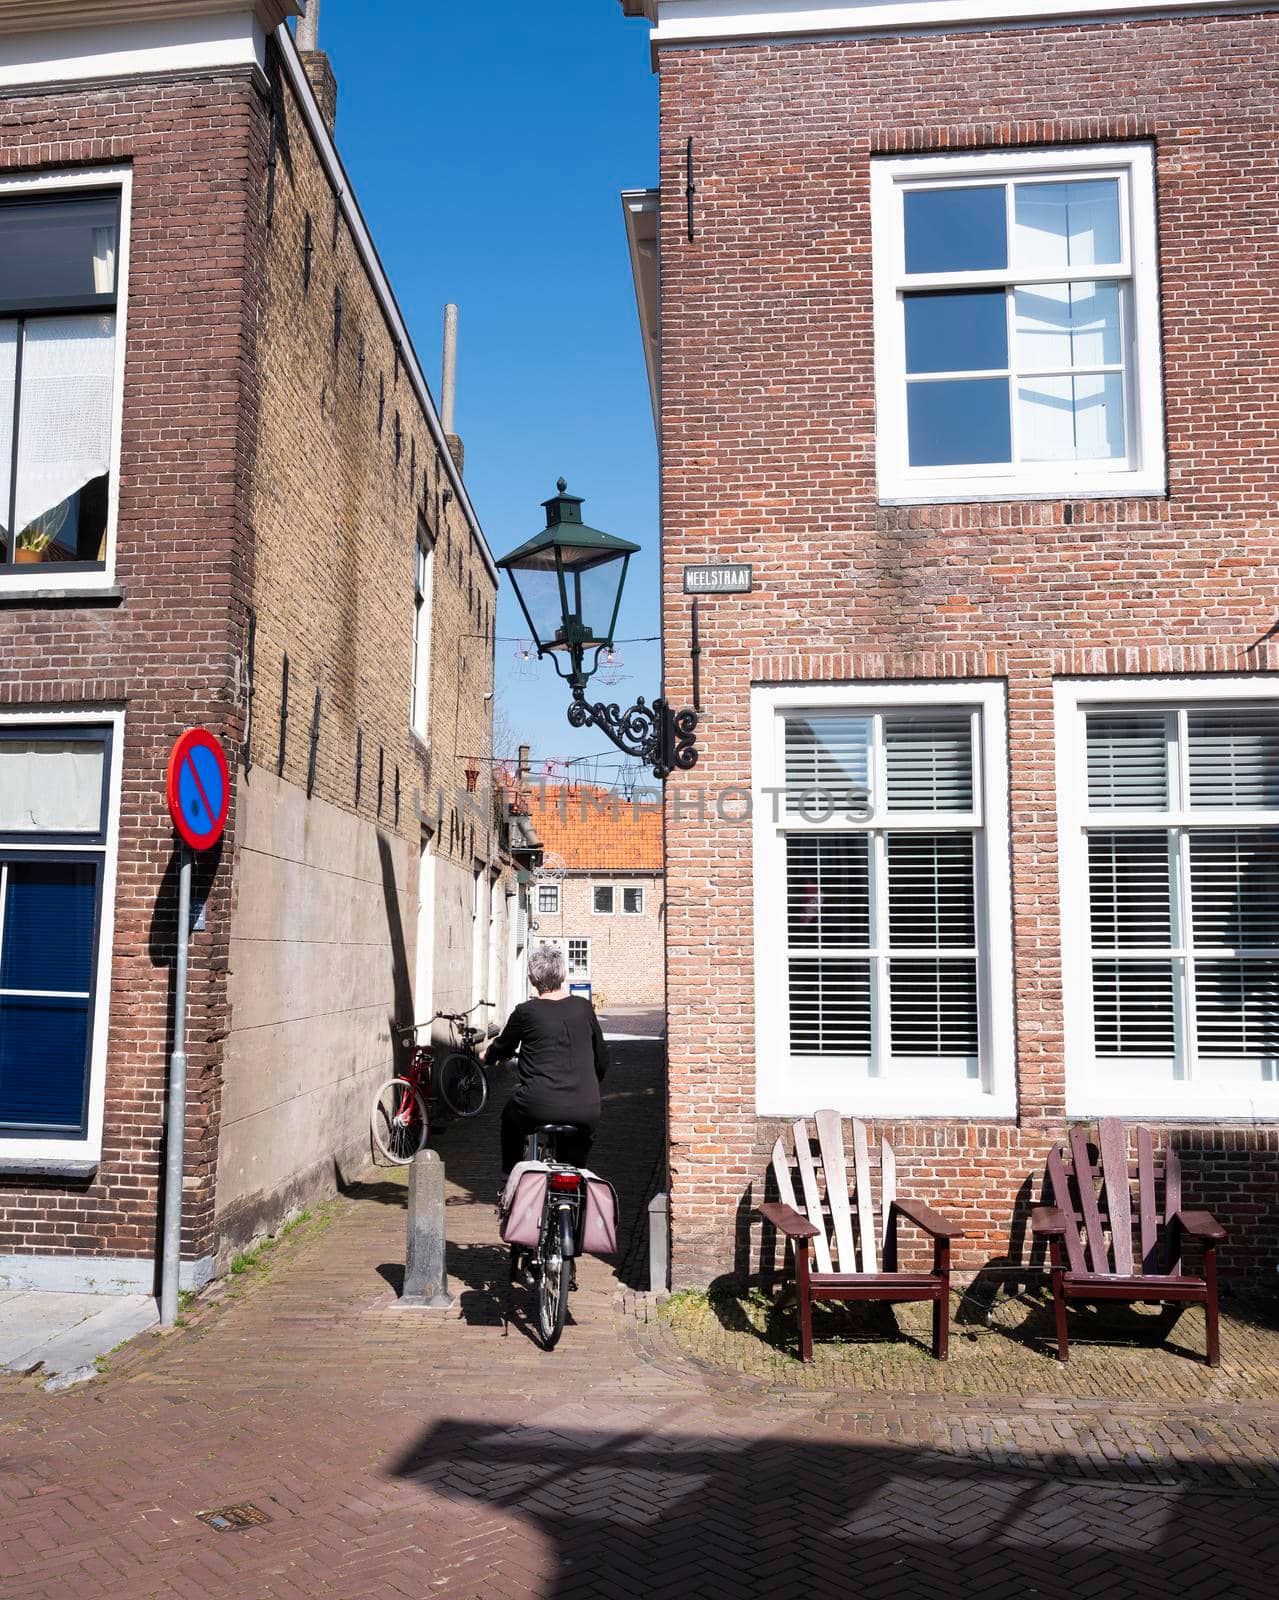 zierikzee, netherlands, 30 march 2021: woman on bicycle in old town of zierikzee in dutch province of zeeland under blue sky